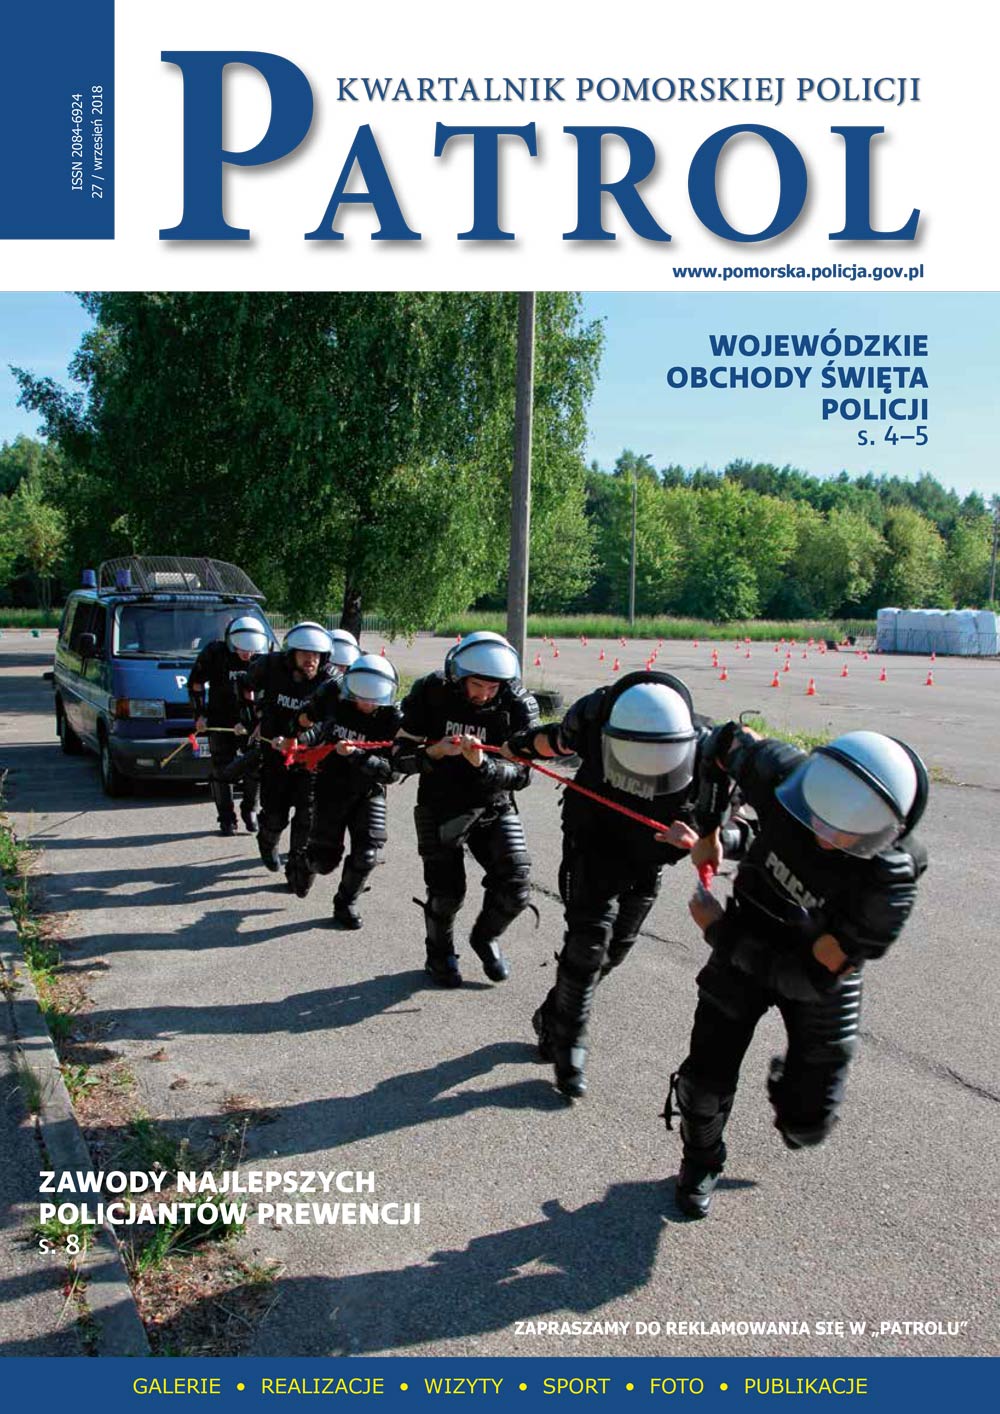 [2018, 03] PATROL. KWARTALNIK POMORSKIEJ POLICJI. - 2018, [nr] 27 / wrzesień, www.pomorska.policja.gov.pl